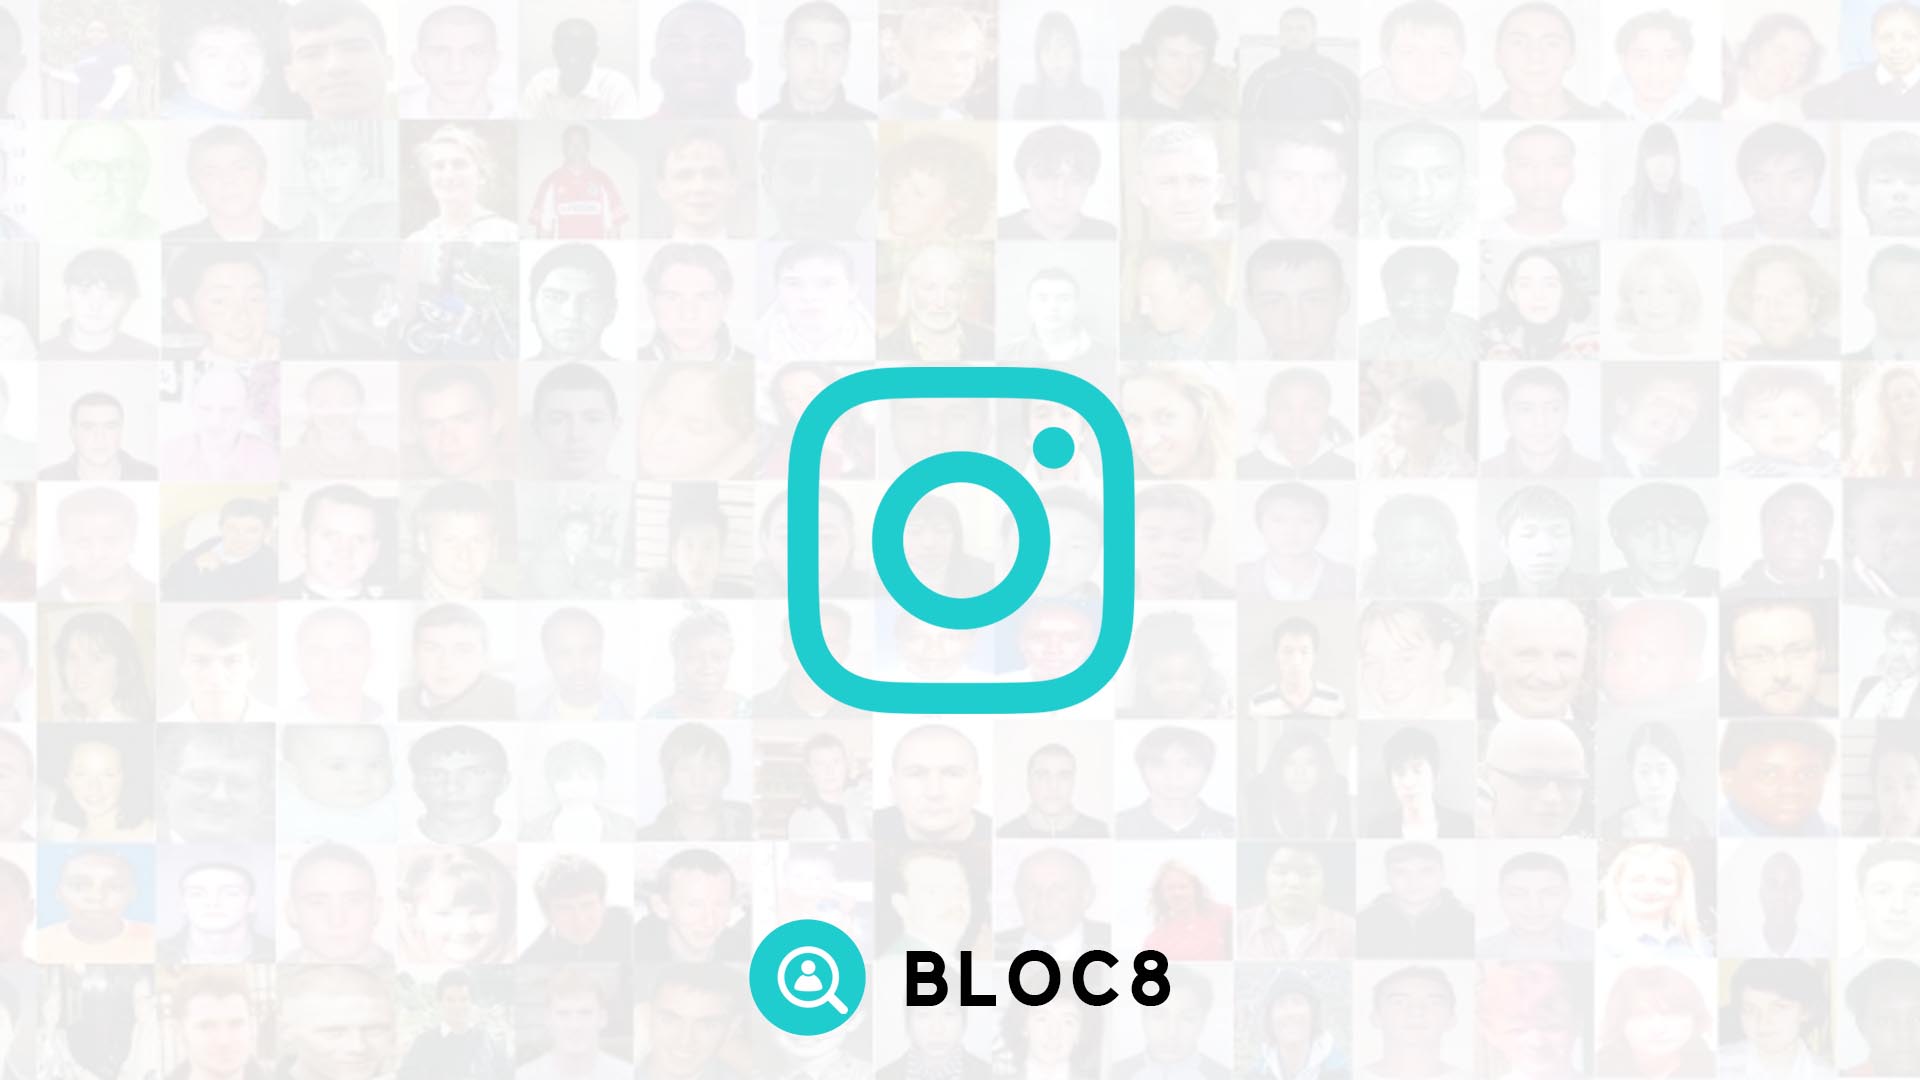 Follow BLOC8 on Instagram